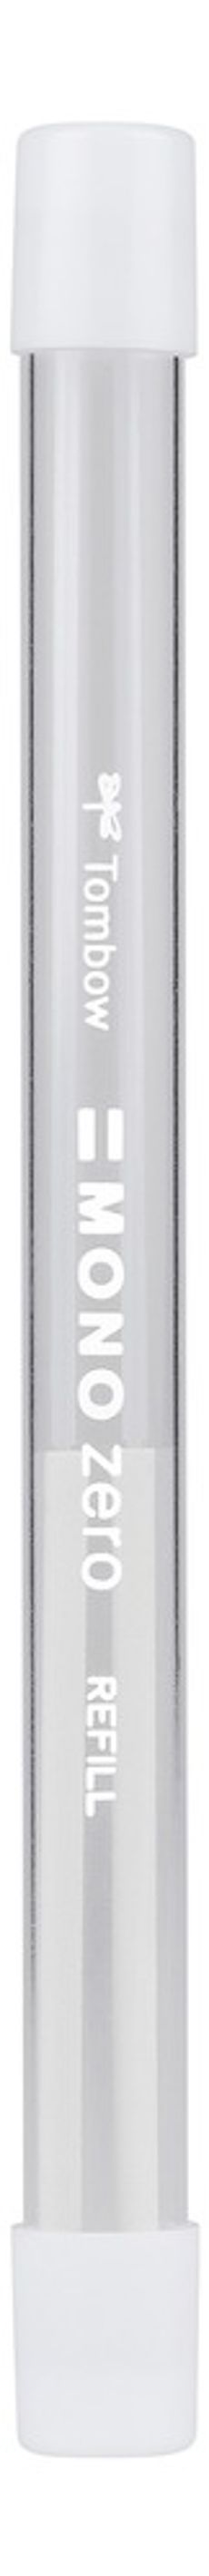 Stylo gomme Mono Zéro pointe rectangle et ronde + 2 recharges